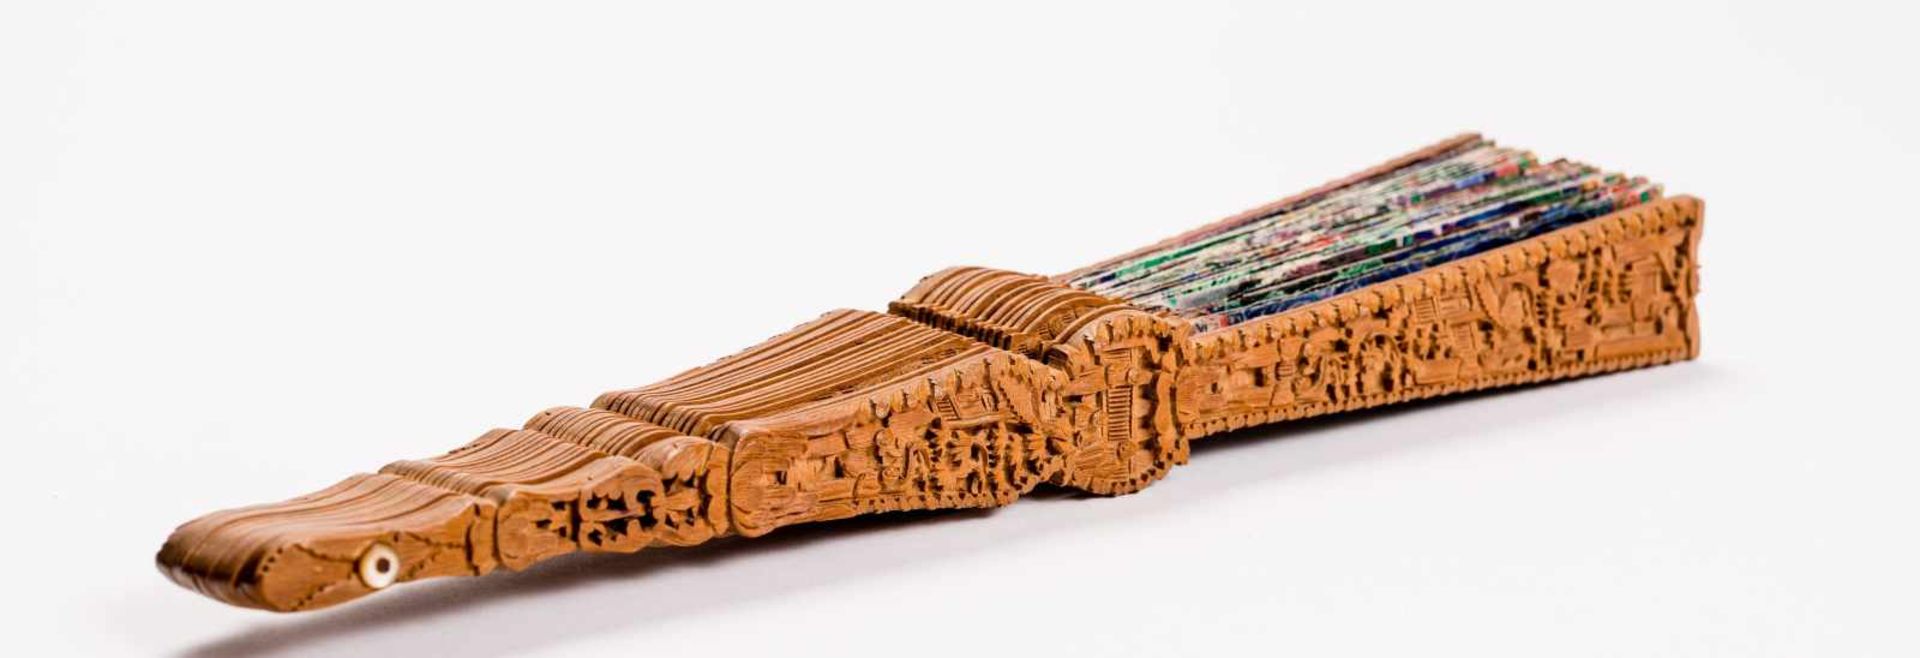 MANDARINE FOLDING FAN WITH FIGURATIVE SCENES Gouache, silk, ivory, wood. China, late Qing Dynasty ( - Image 6 of 7